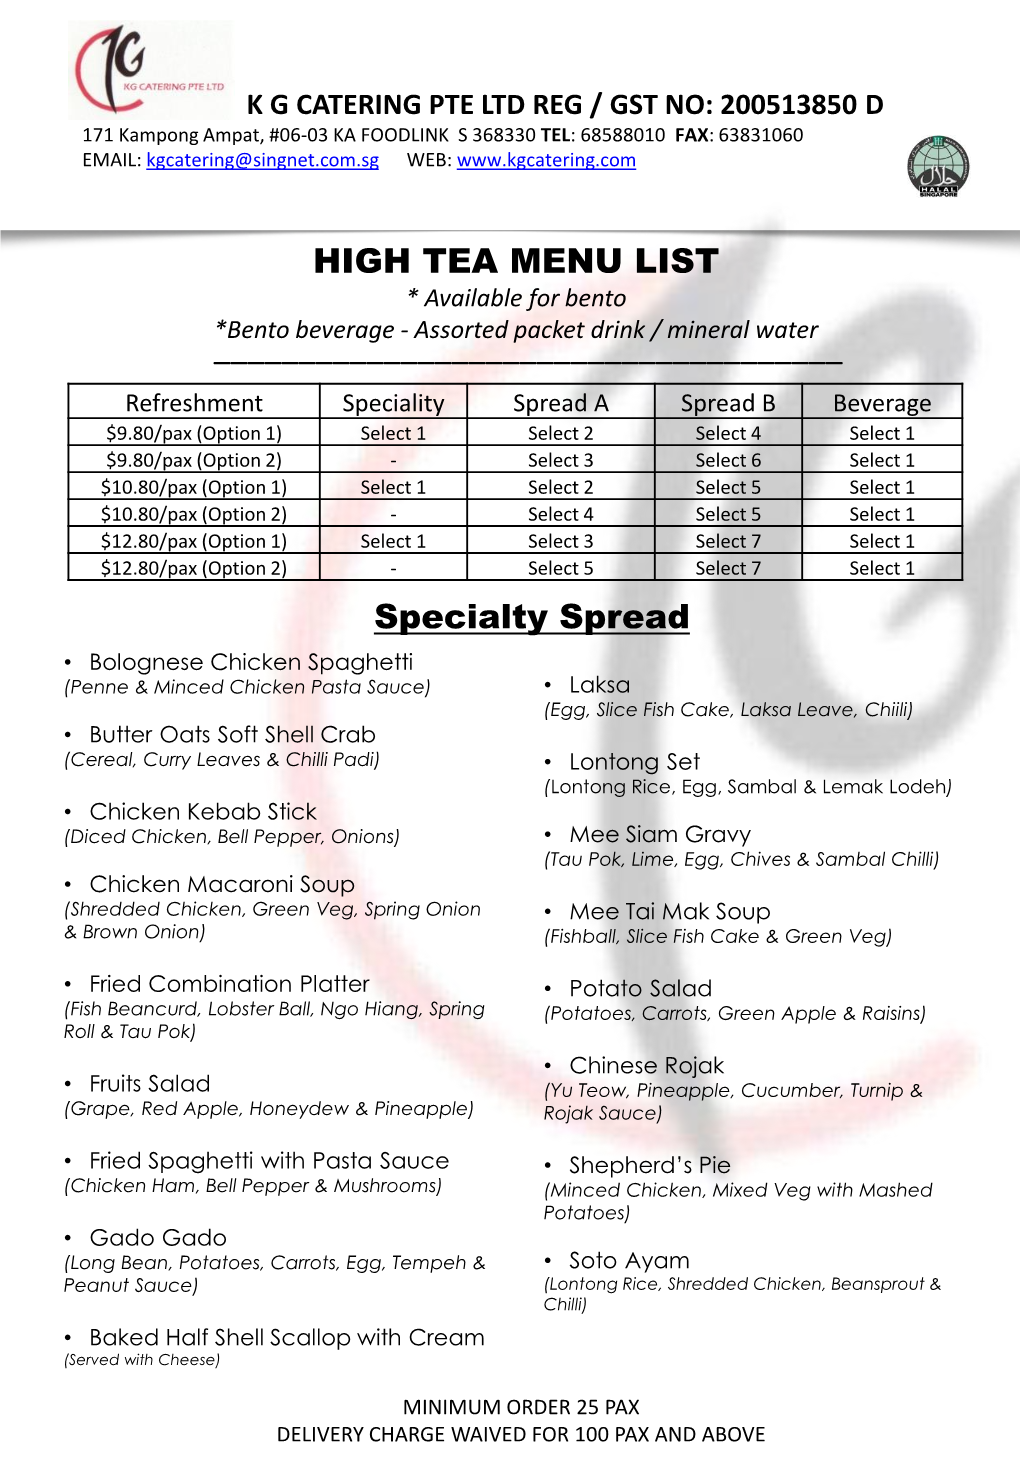 High Tea Menu List